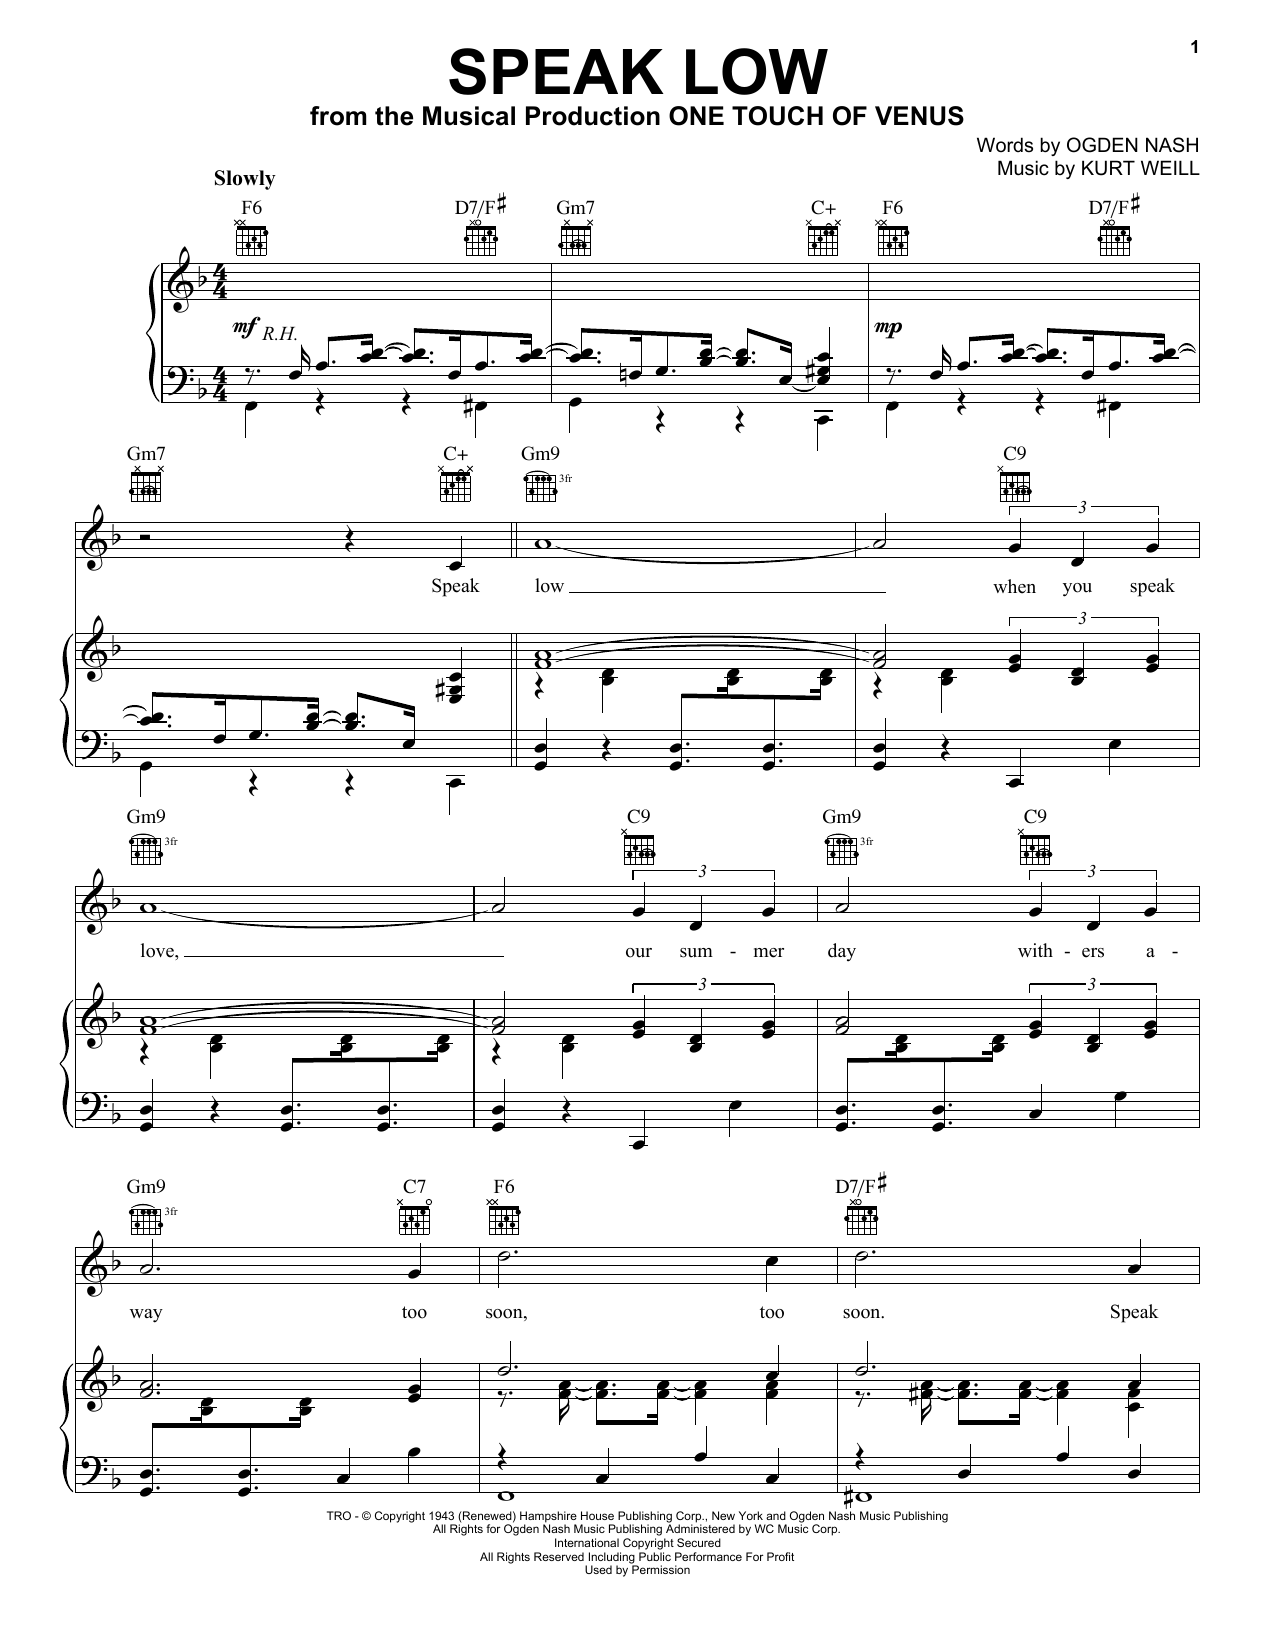 Kurt Weill Speak Low Sheet Music Notes & Chords for Guitar Tab - Download or Print PDF